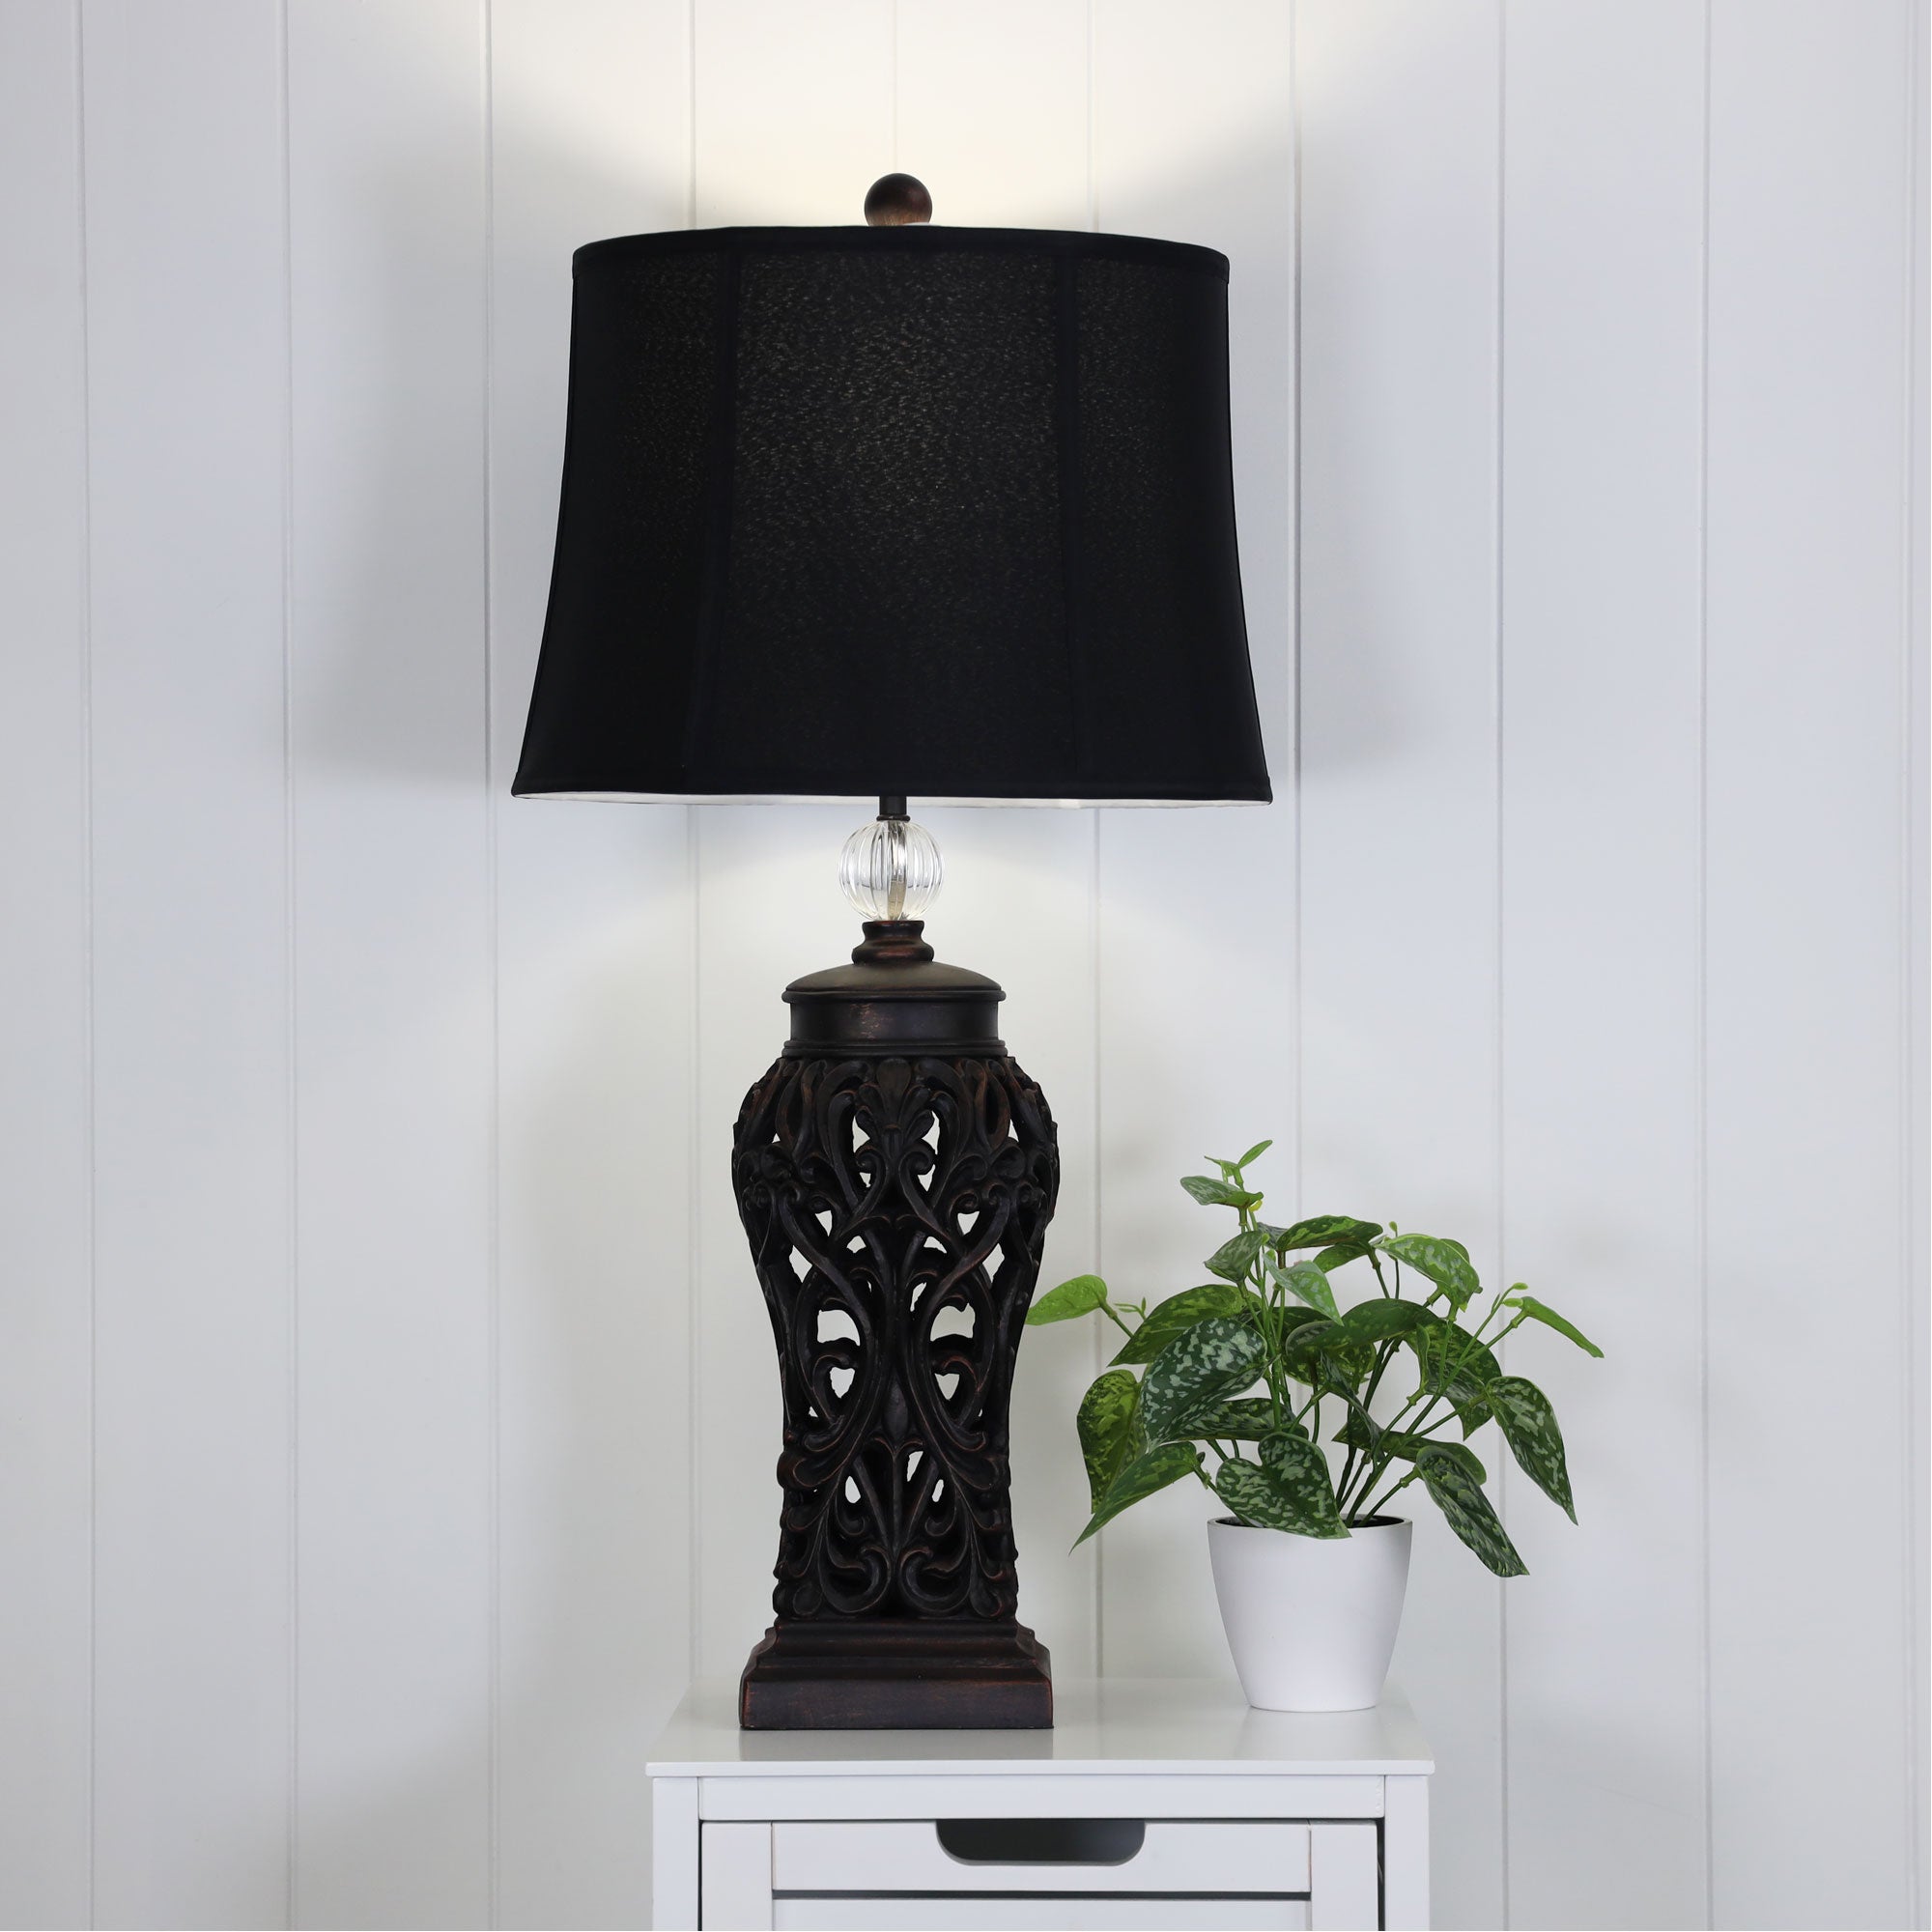 Dorne Antique Black Cut 1 Light Table Lamp With Harp Shade - OL97976BK